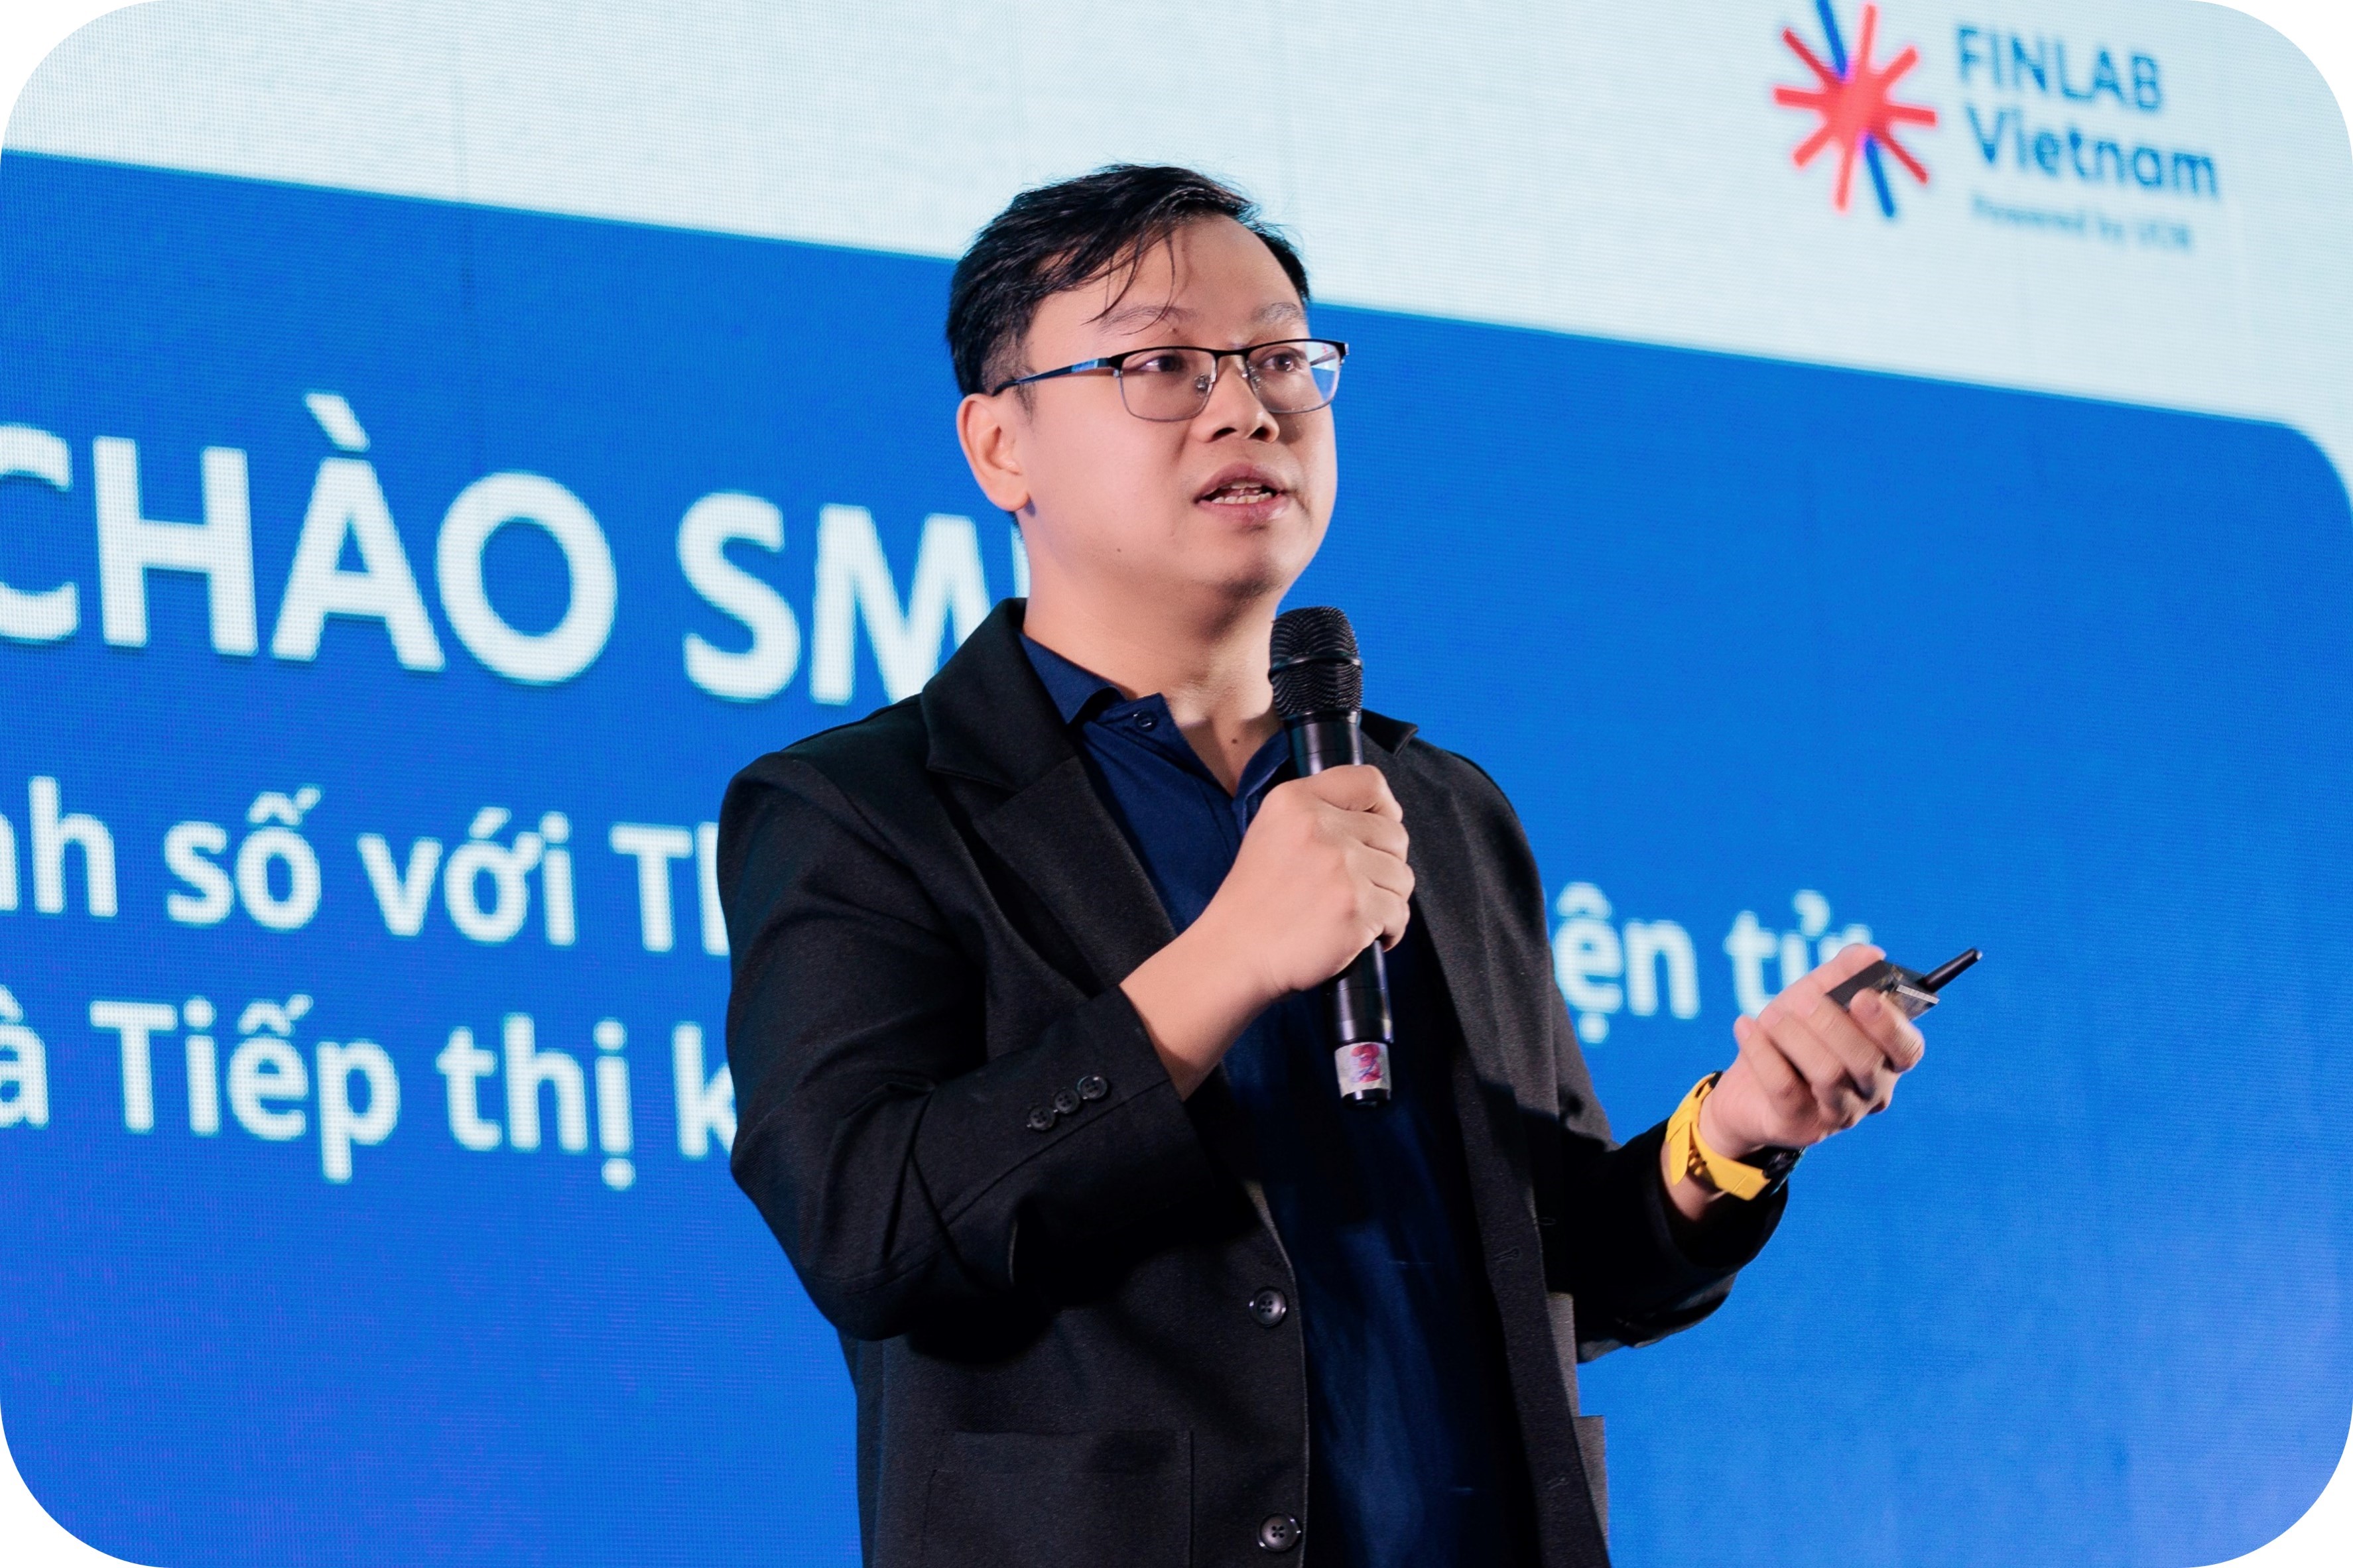 Haravan Le Hong Duc - Xin Chào Smes: Grow Your Sales Through E-Commerce And Digital Marketing 2023 Recap